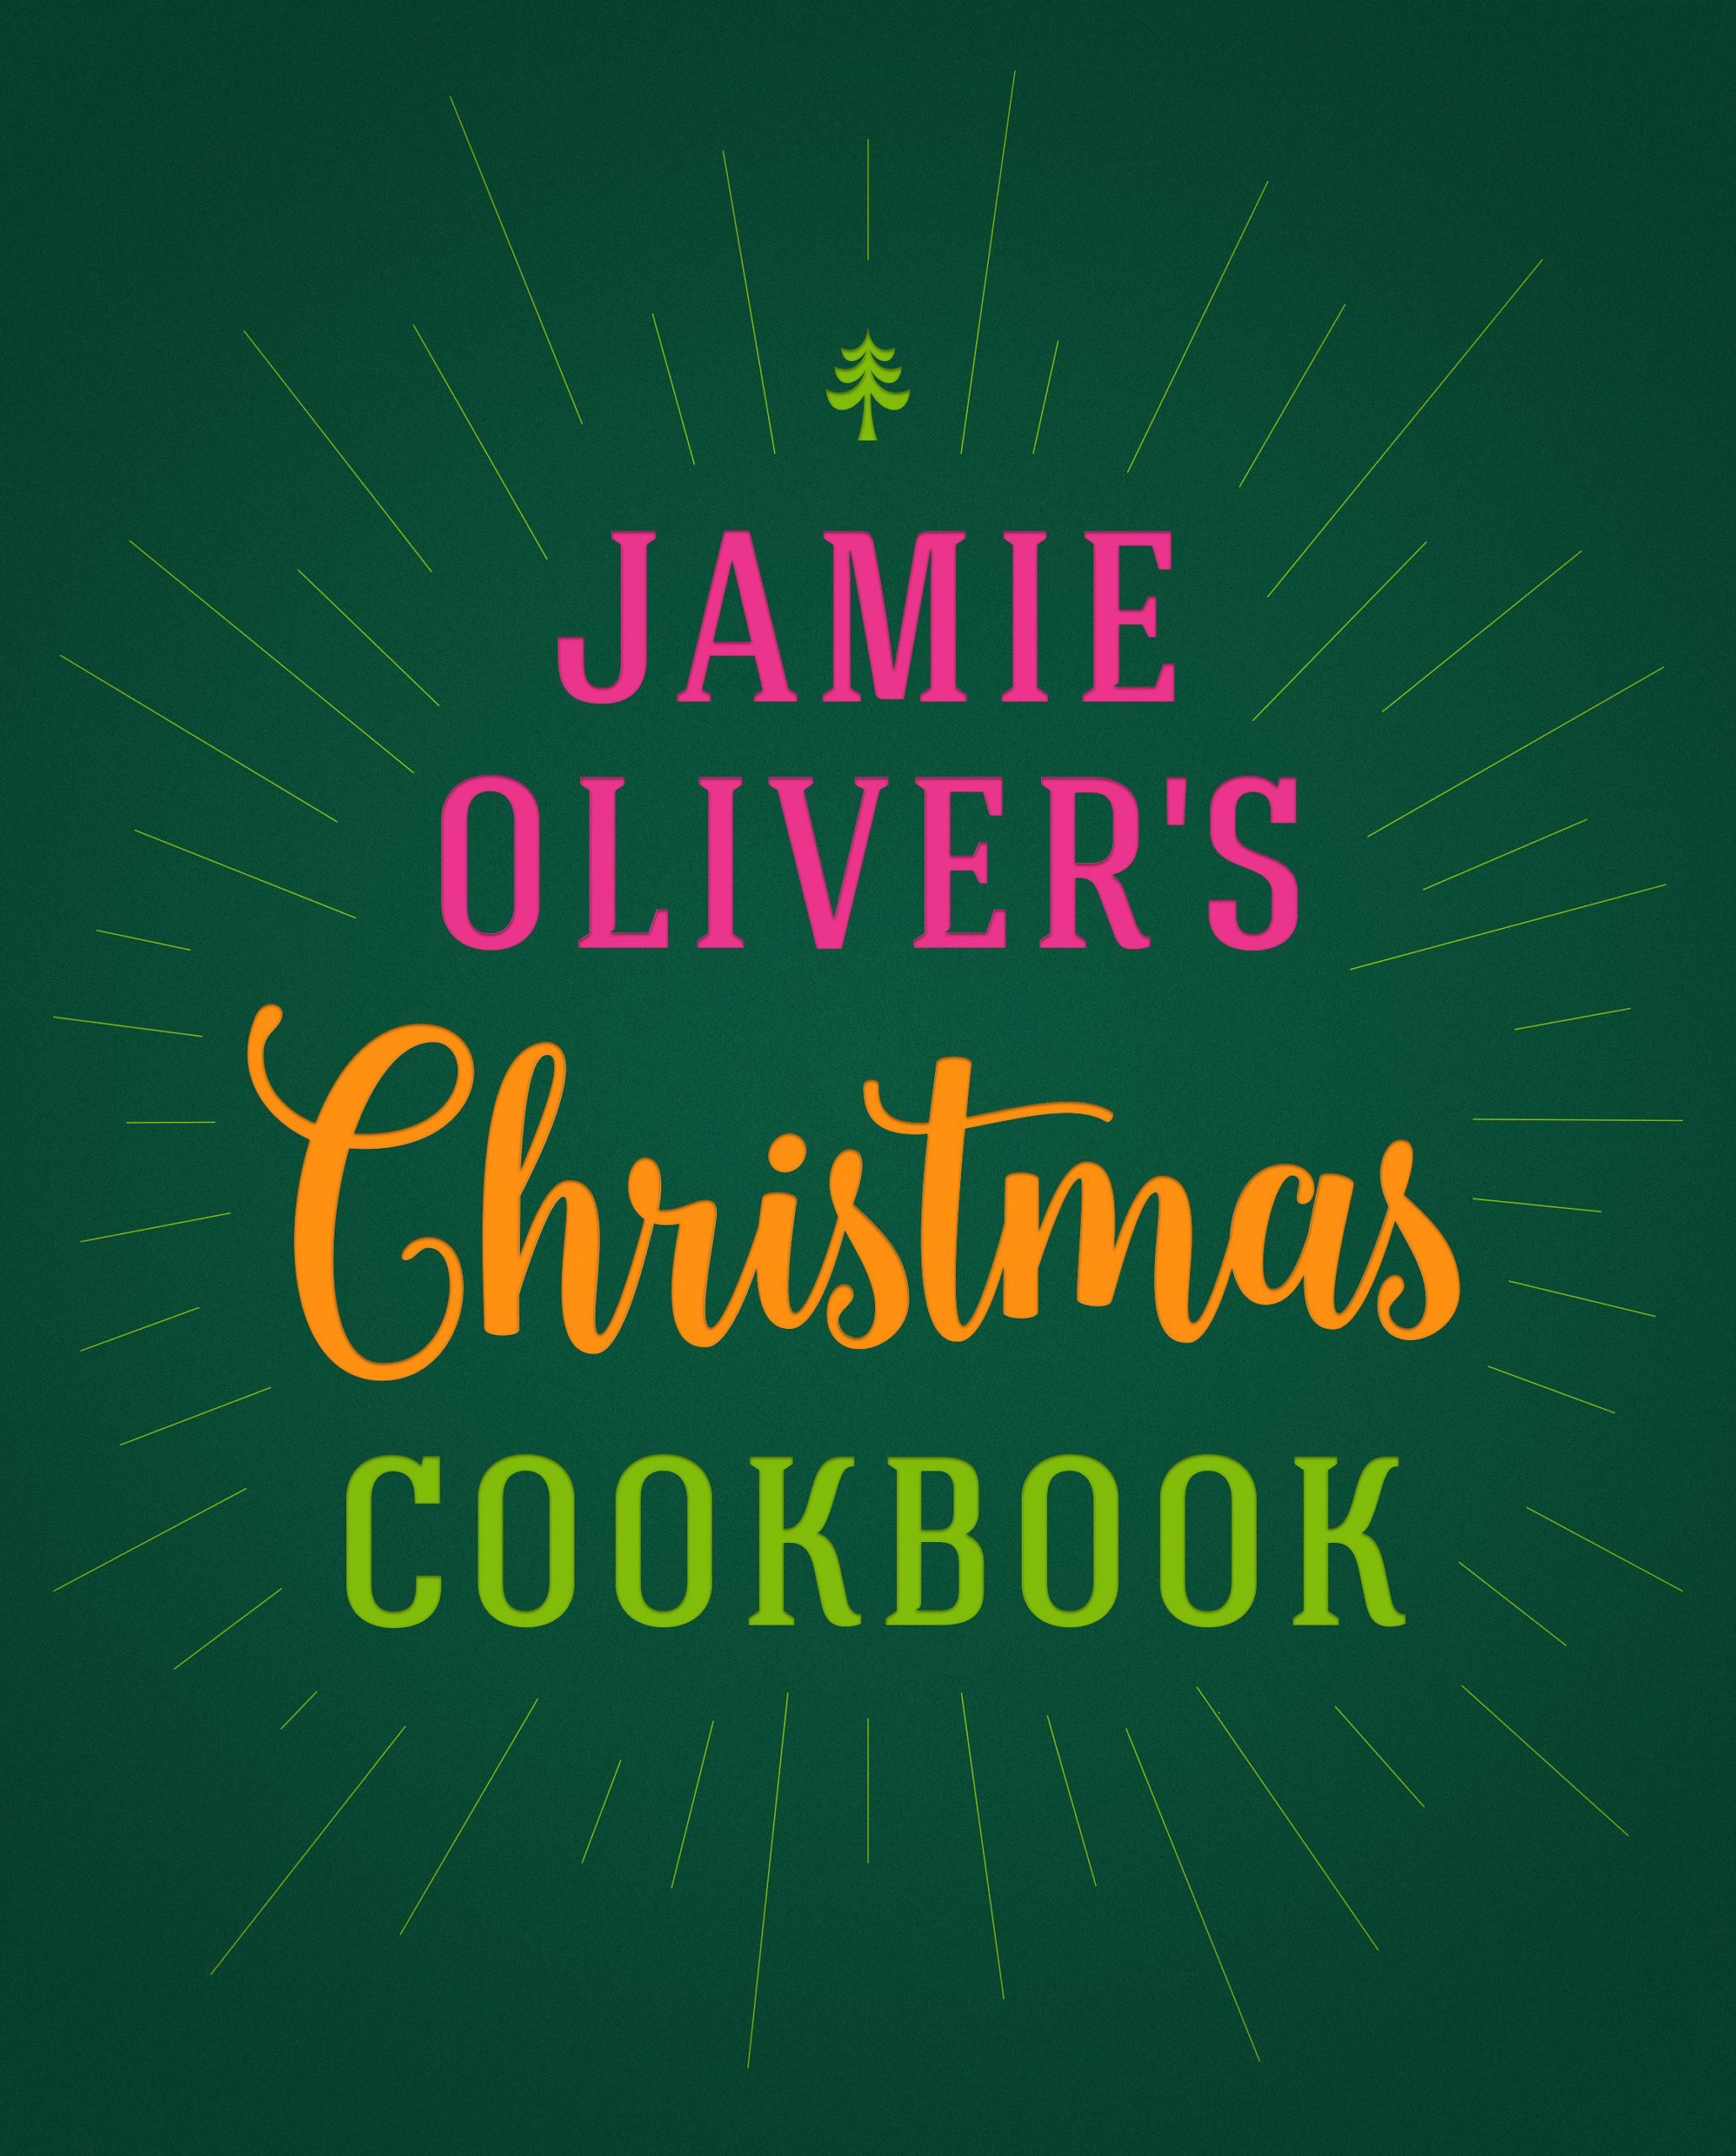 Jamie Oliver Job lot little book of Christmas NEW Gordon Jamie Oliver dvd plus recipe cards 